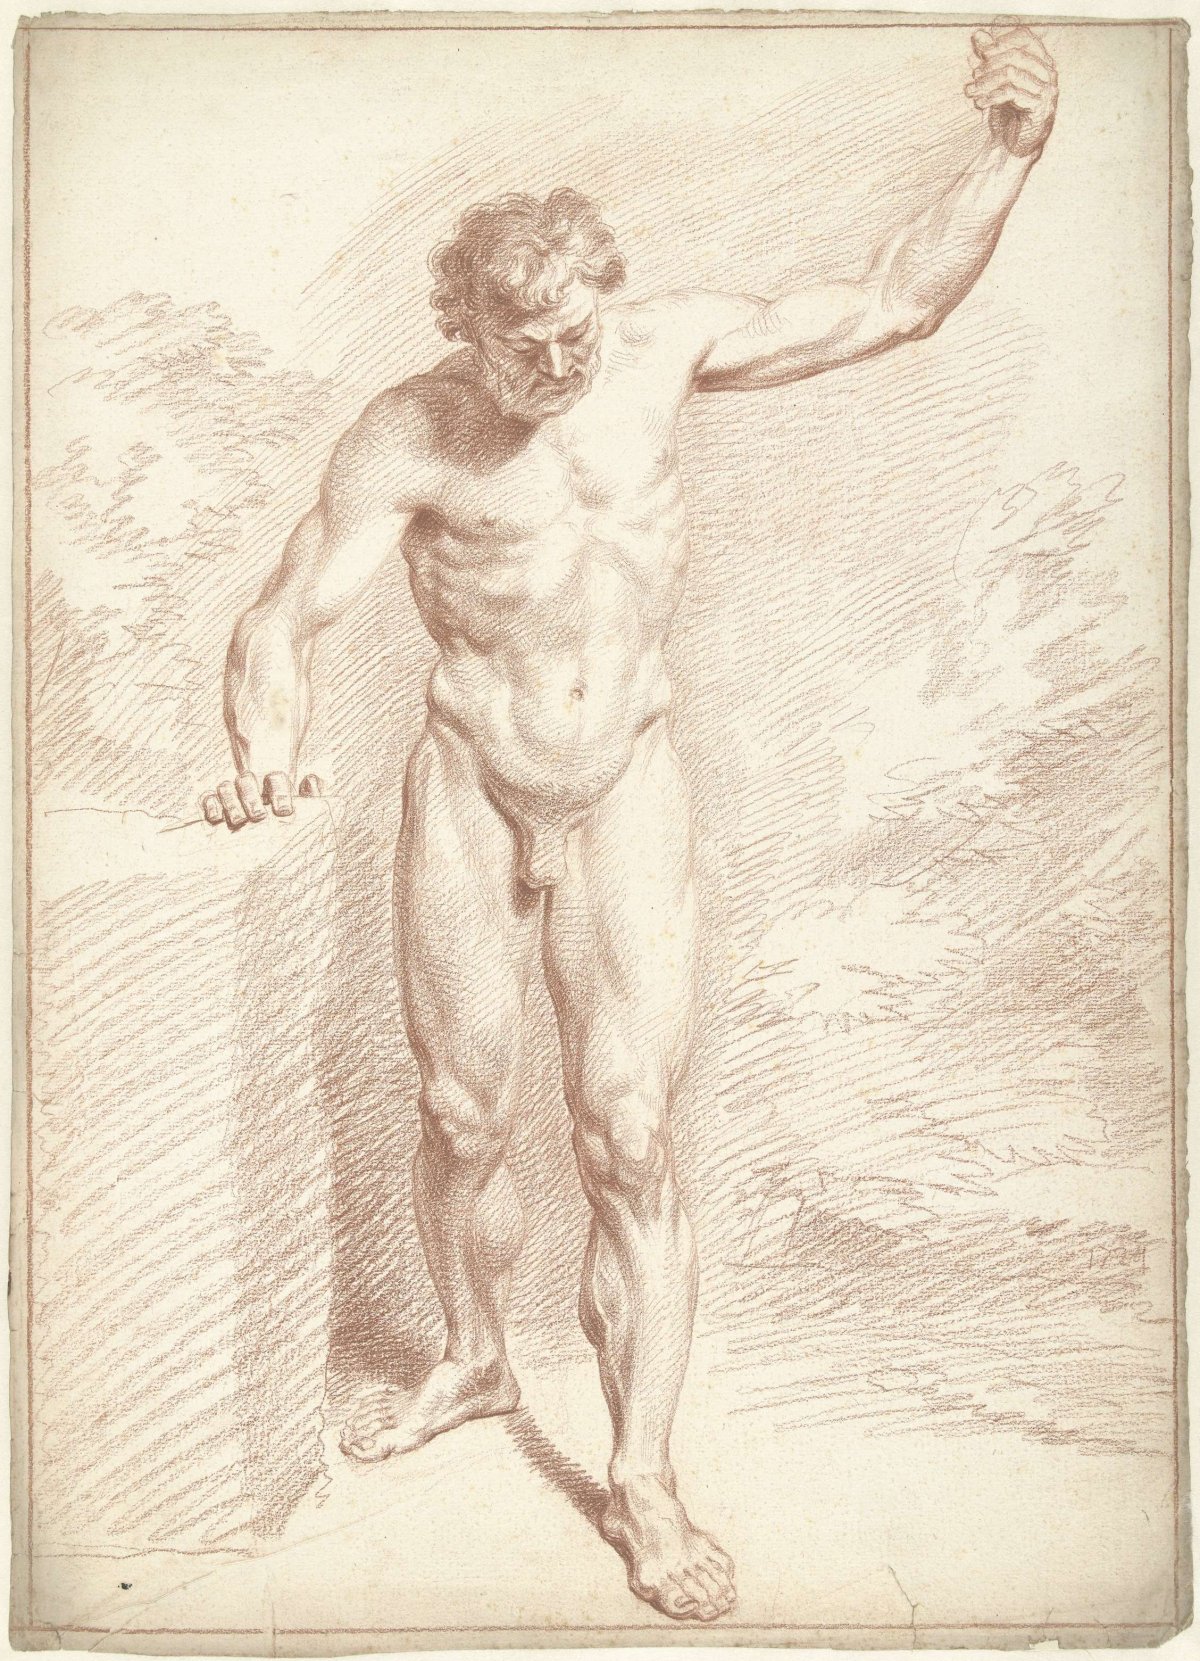 Male nude, standing, left arm raised, Louis Fabritius Dubourg, 1724